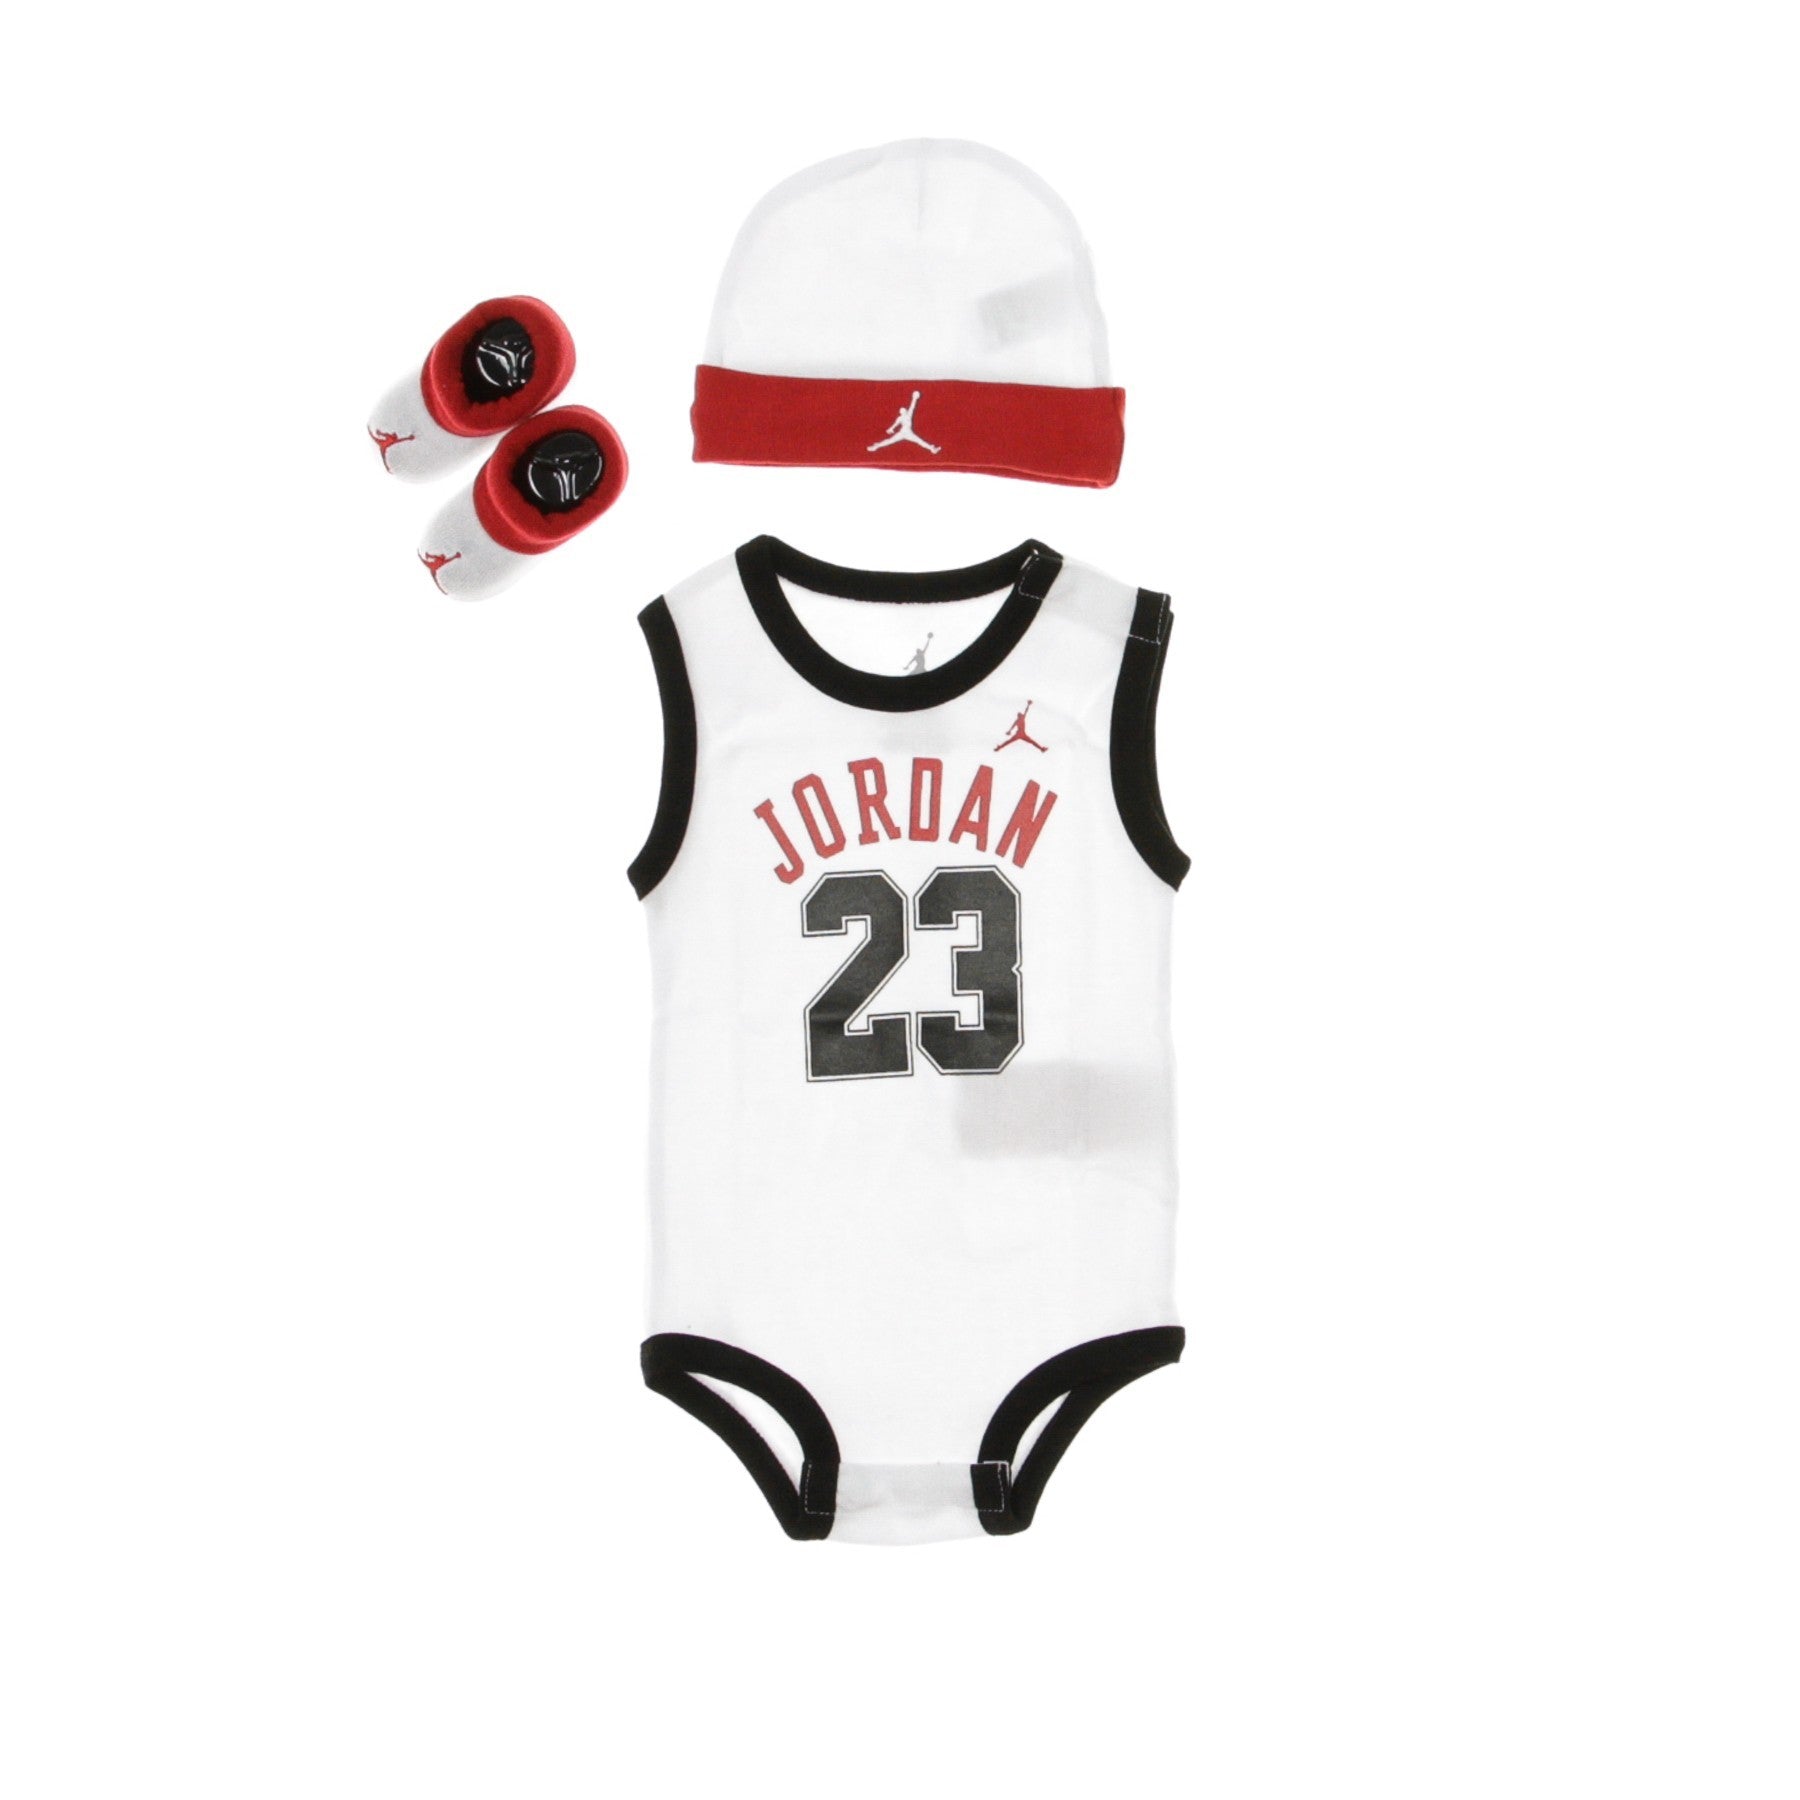 Baby Bodysuit+hat+socks Set Jordan 23 Jersey Bodysuit &amp;hat Set White